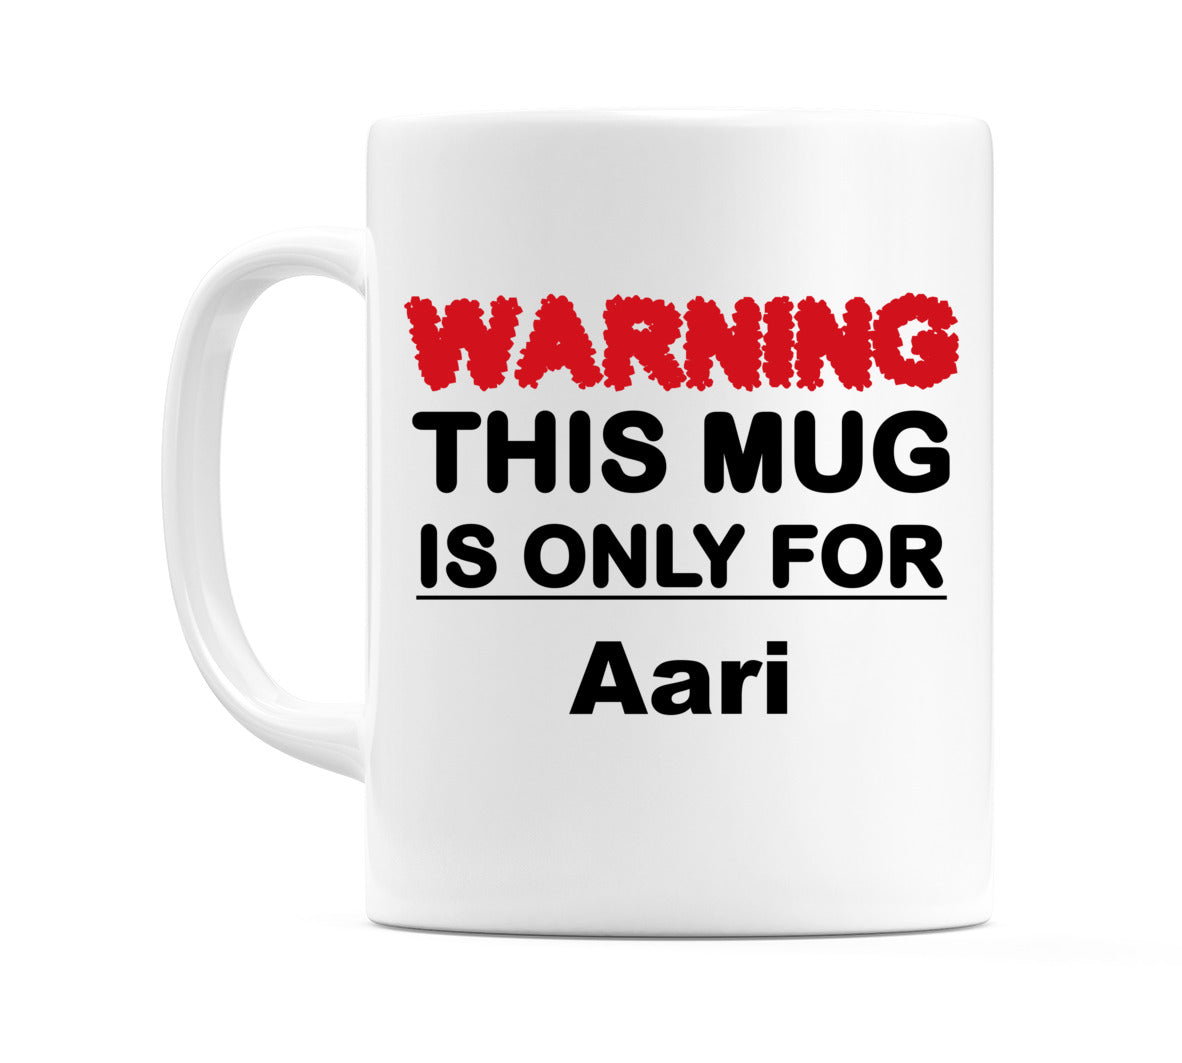 Warning This Mug is ONLY for Aari Mug